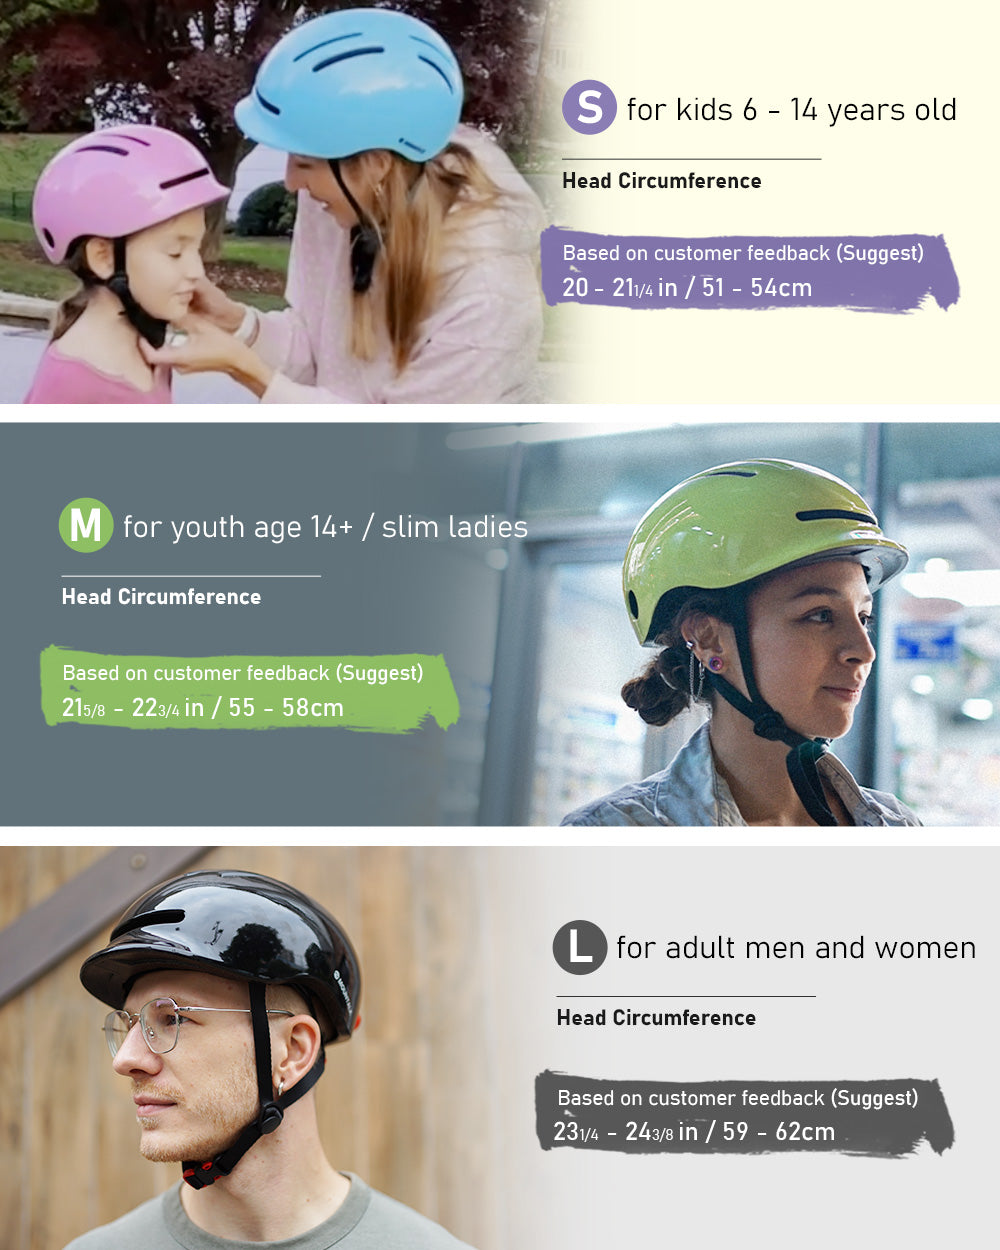 Bike Helmets for Adults with Magnetic Light，Shiny Aqua